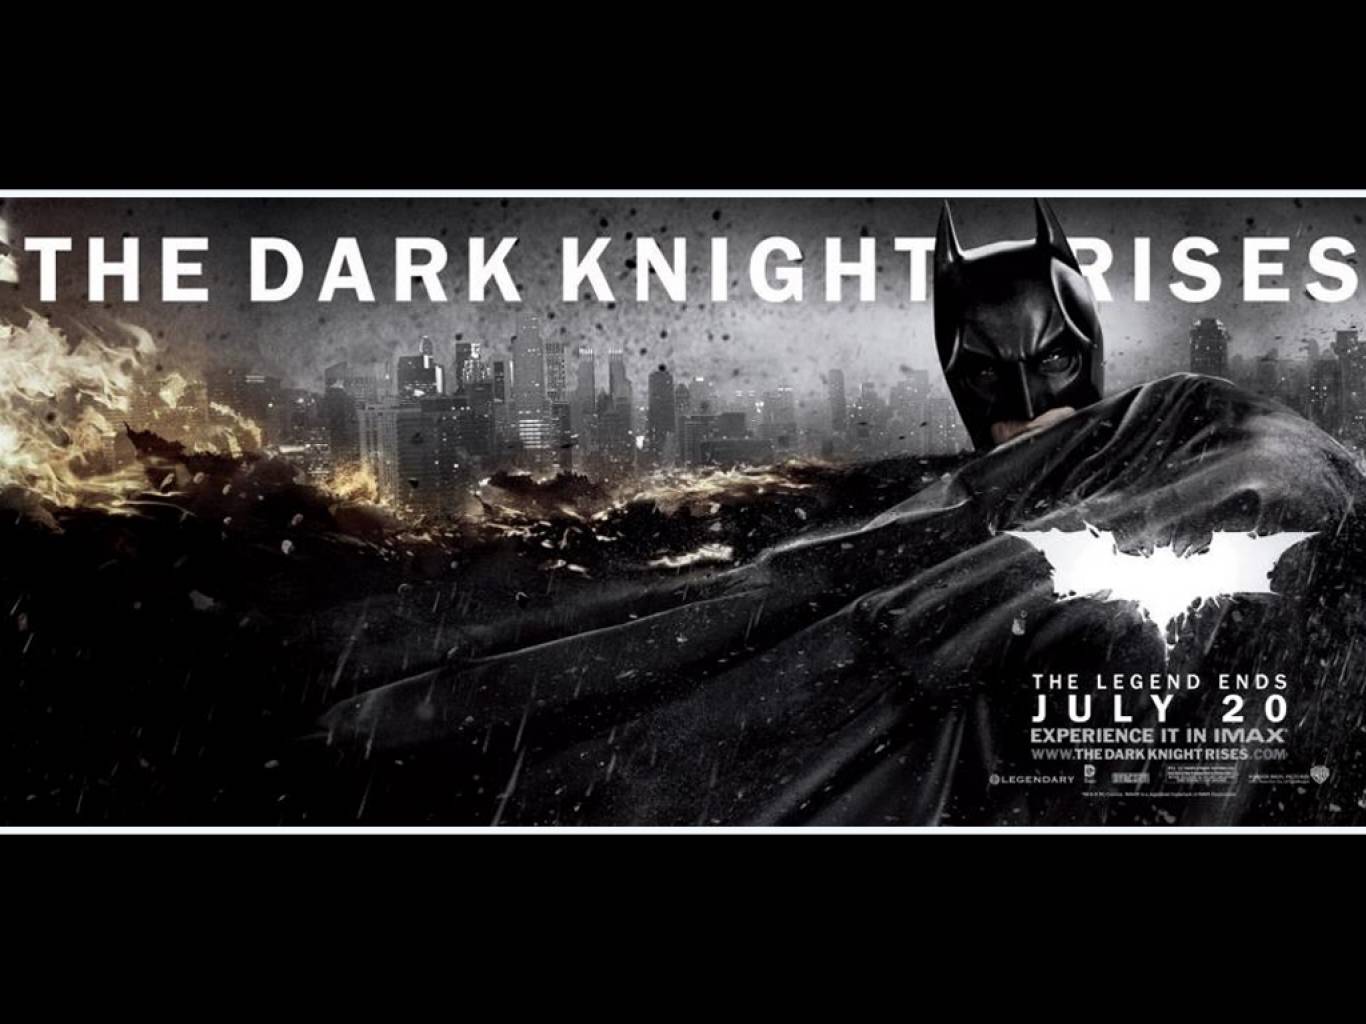 The Dark Knight Rises Movie HD Wallpaper. The Dark Knight Rises HD Movie Wallpaper Free Download (1080p to 2K)